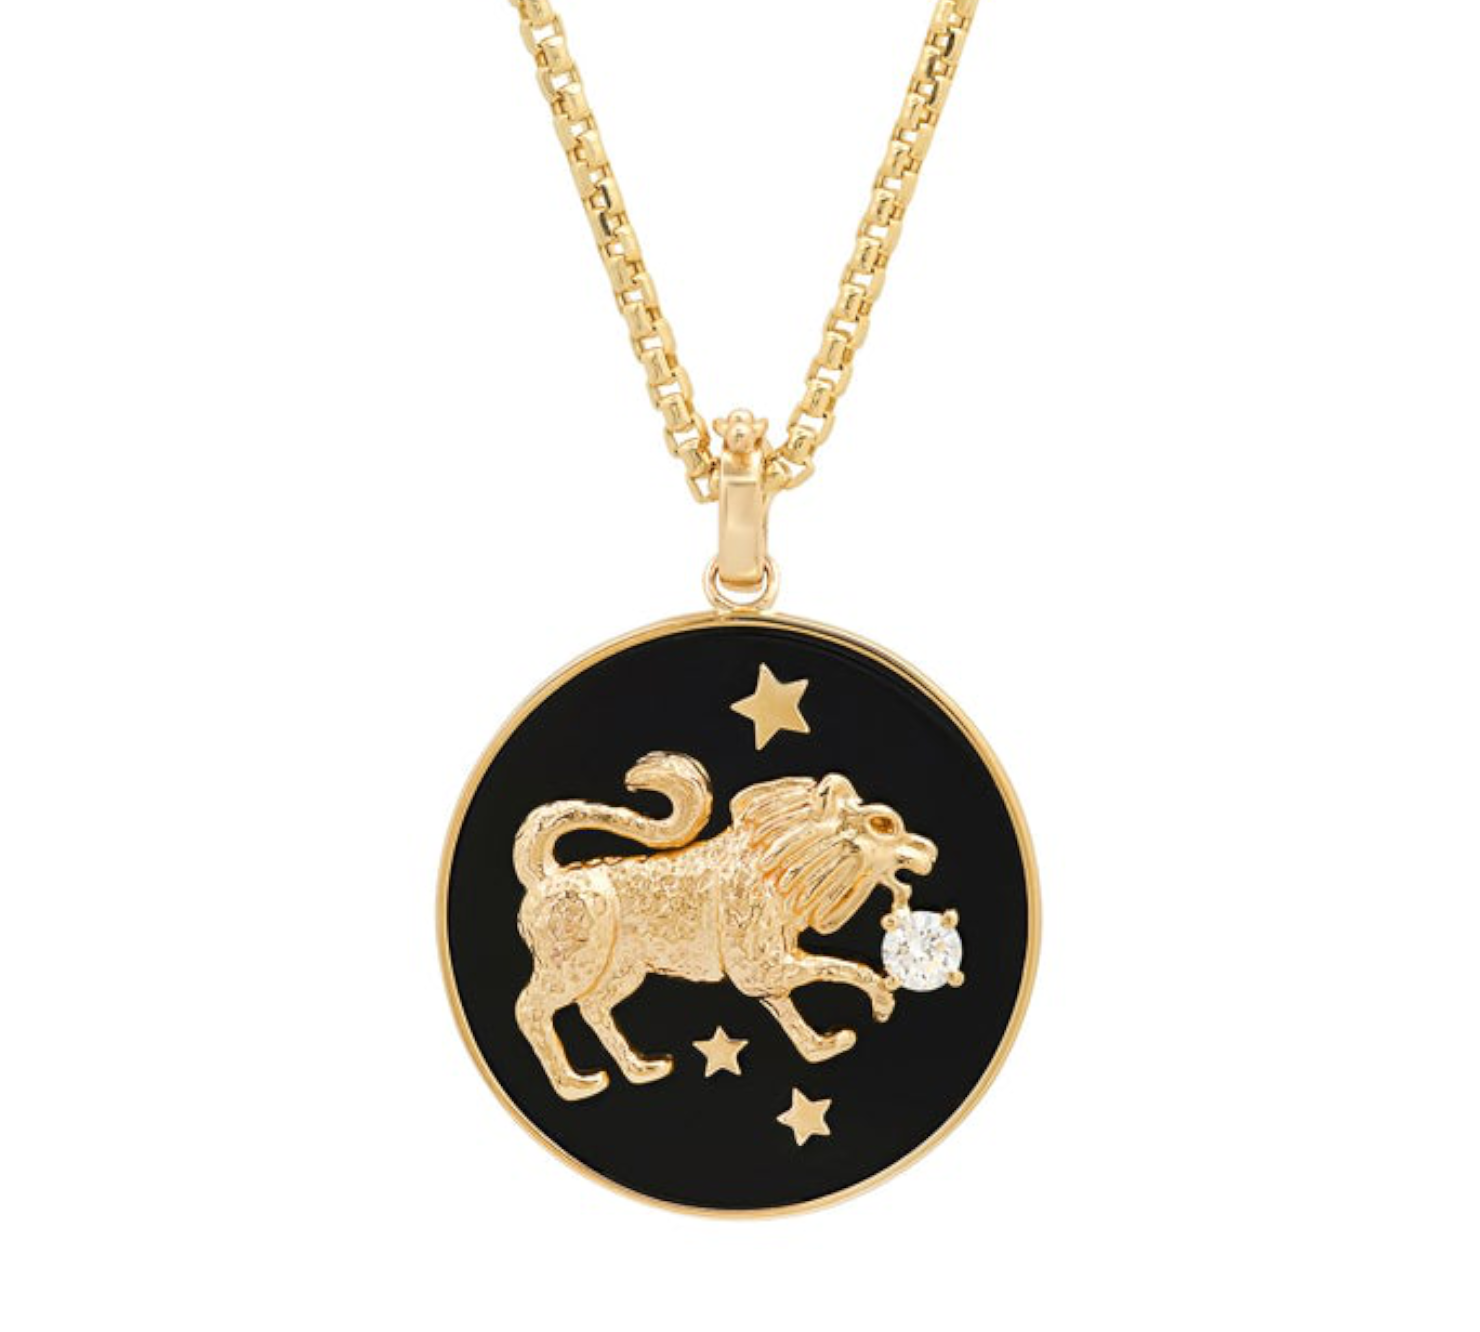 Rachel Onyx Lion Necklace Pendant Helena Rose Jewelry 16 Inch Chain  